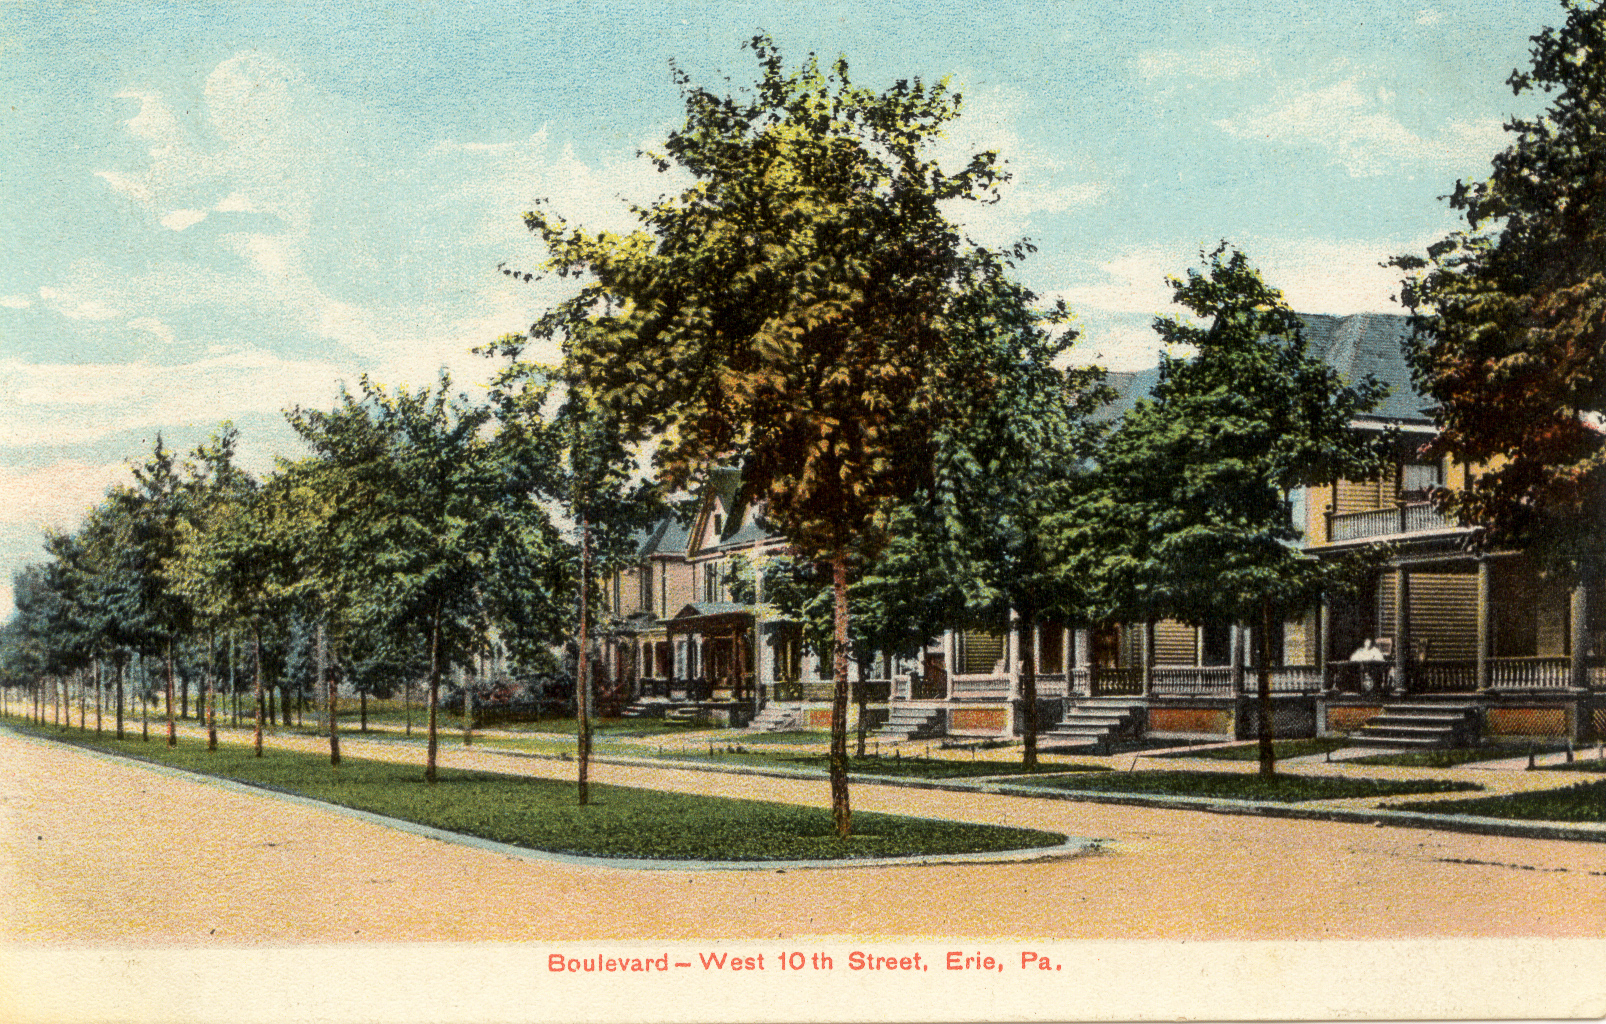 Boulevard - West 10th Street, Erie PA